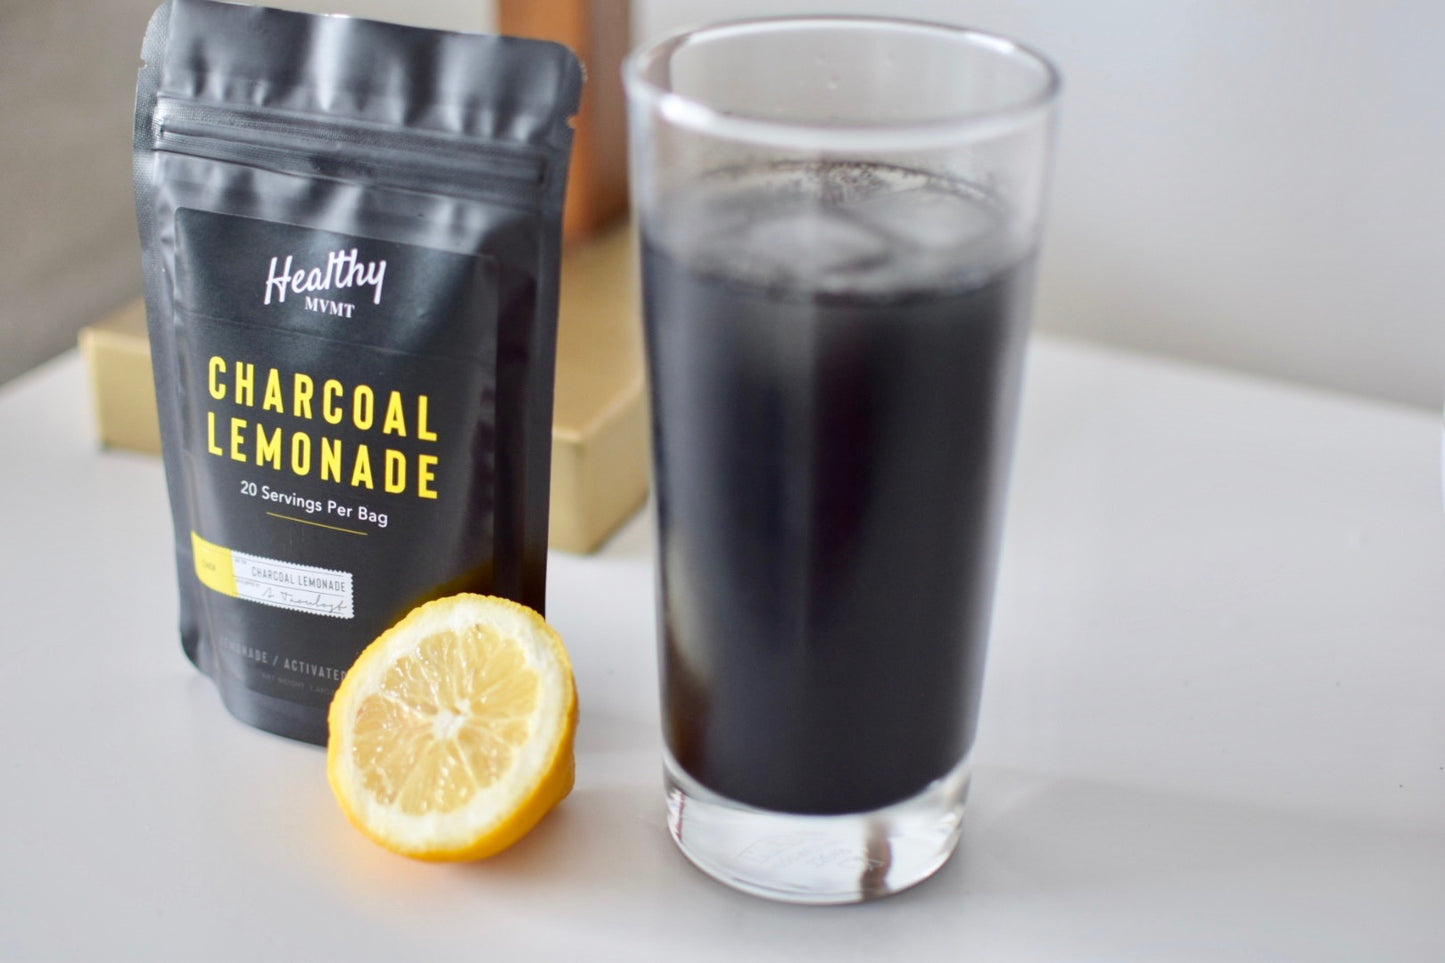 Charcoal Lemonade, Beet Lemonade, Mange Lemonade | Trio Lemonade Bundle by HealthyMVMT